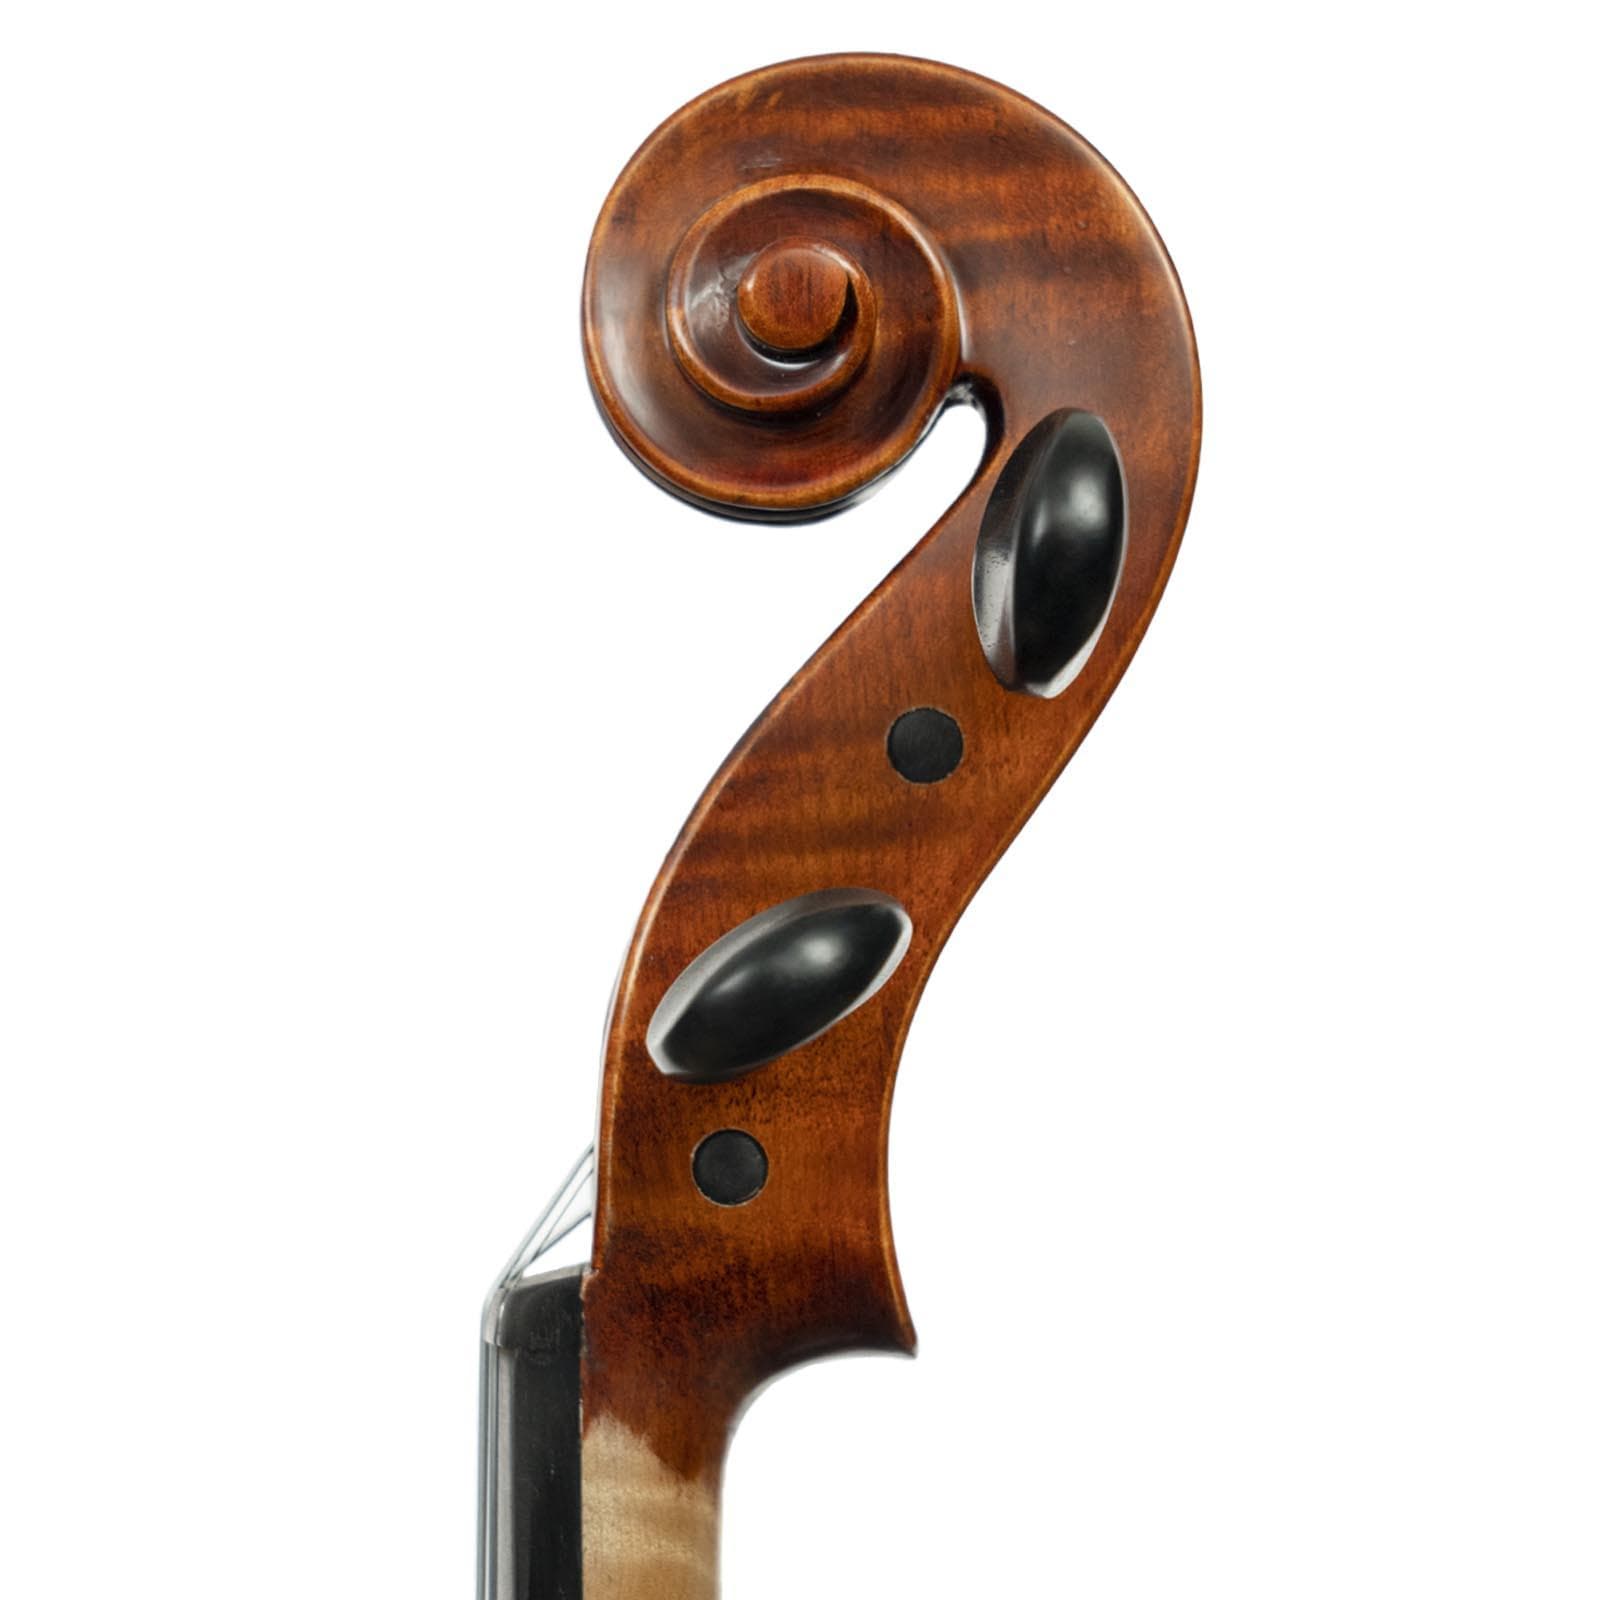 Pre-Owned Franz Hoffmann Prelude Violin